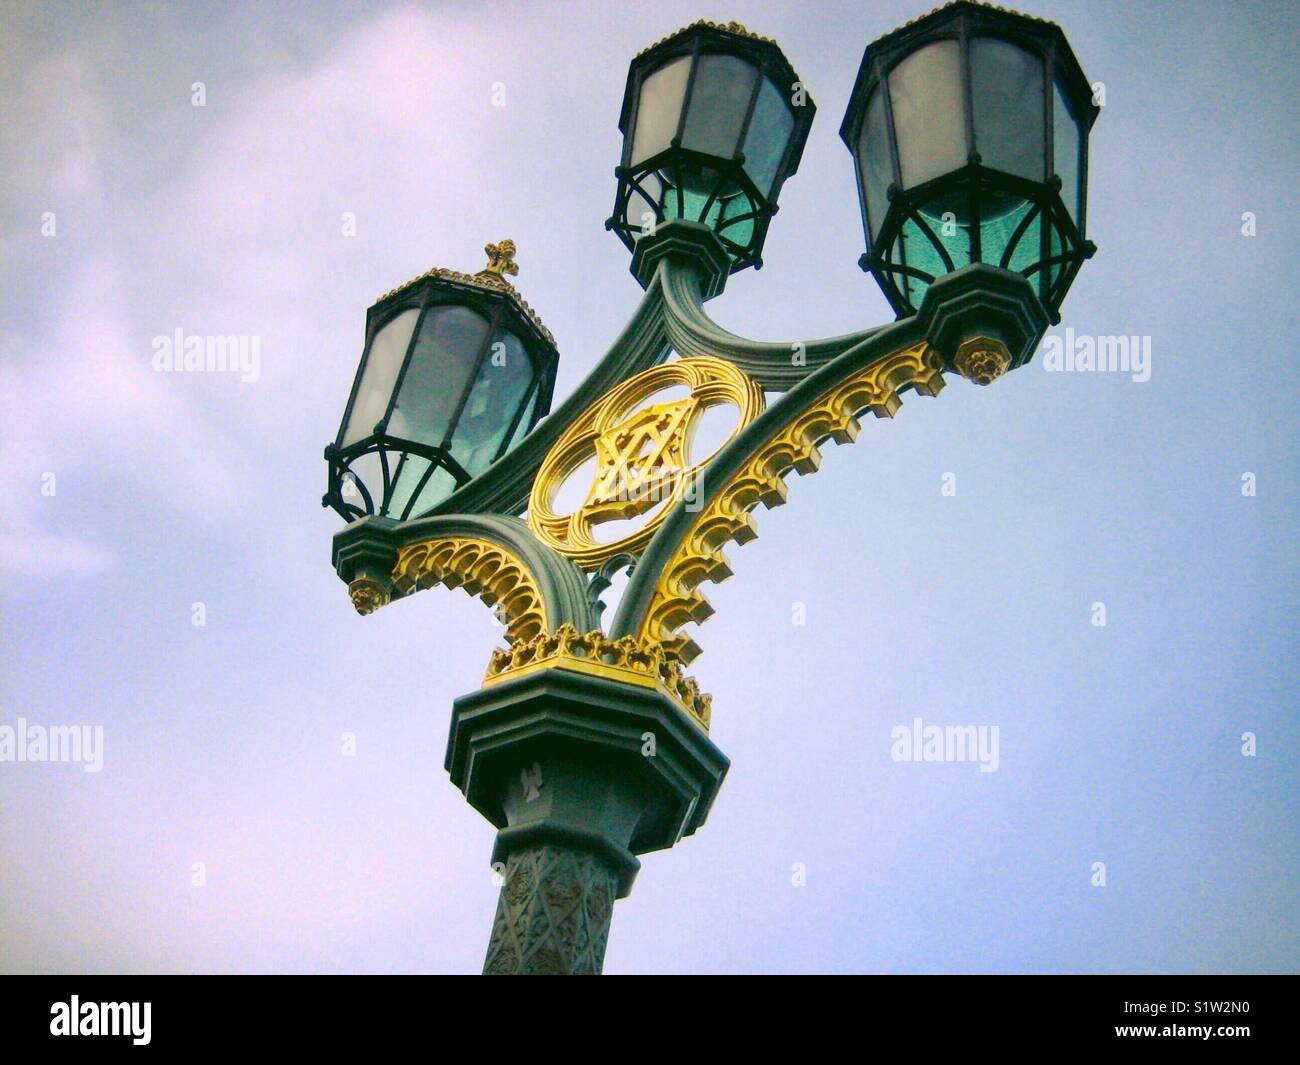 A streetlight in London Stock Photo